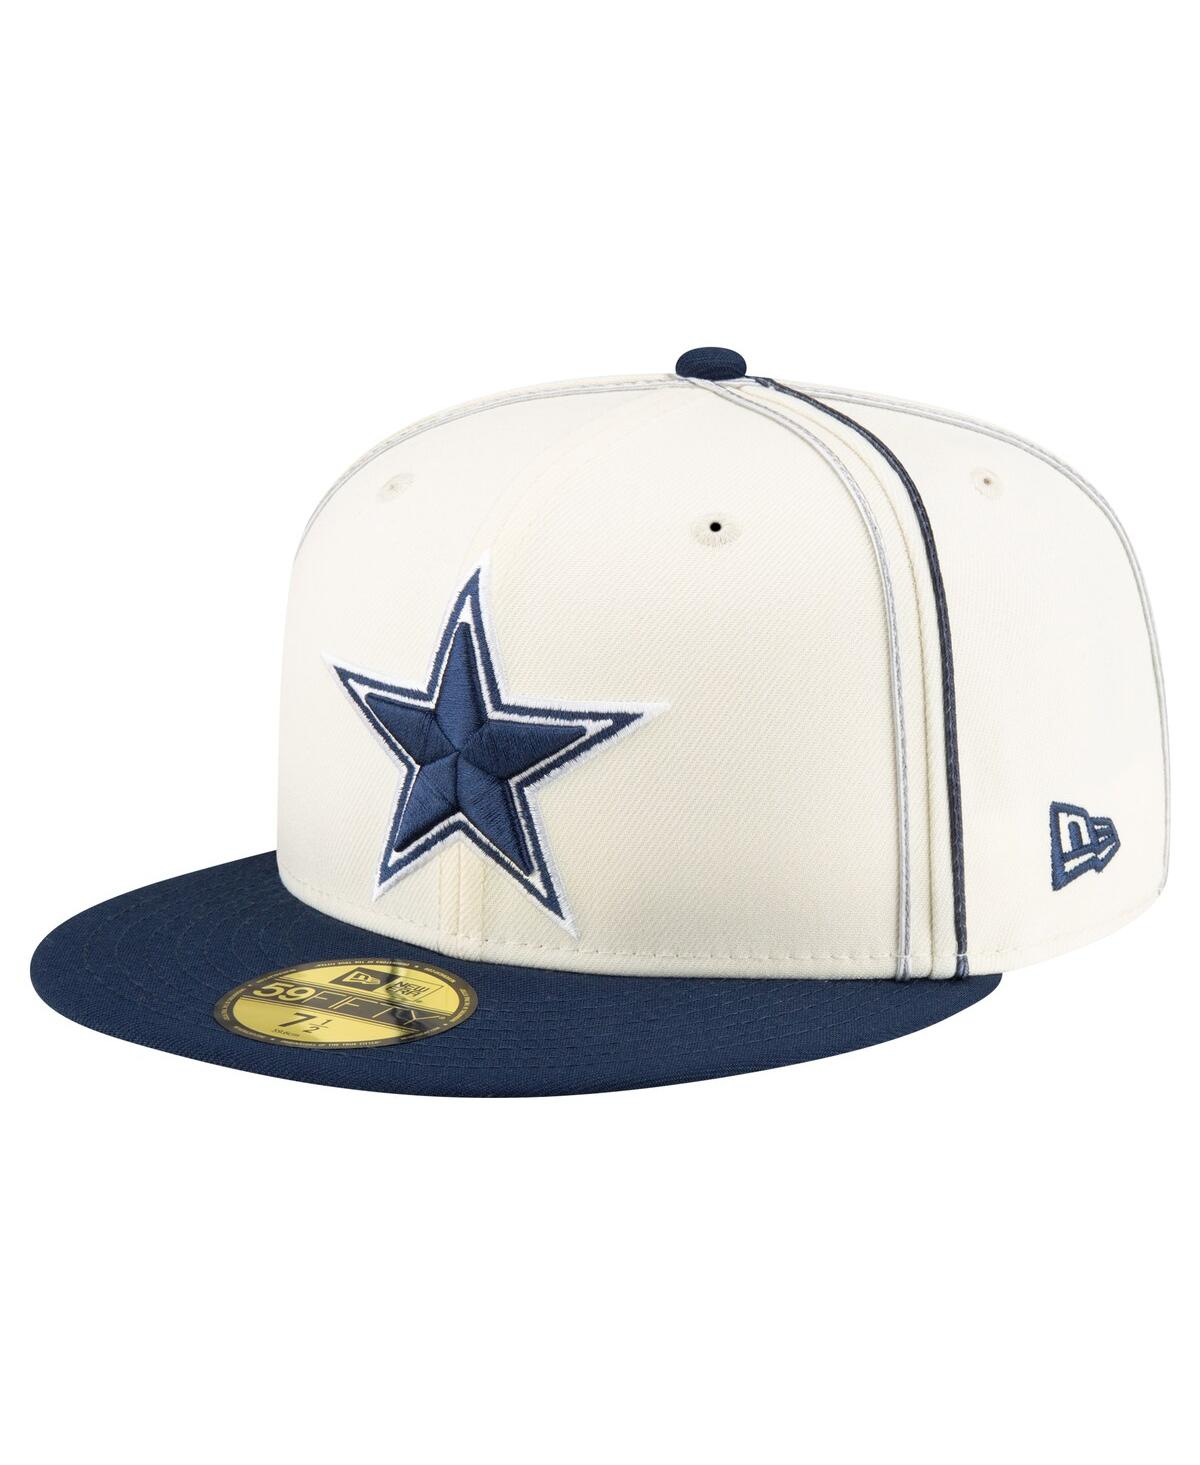 Men's Cream Dallas Cowboys Soutache 59FIFTY Fitted Hat - Cream Navy